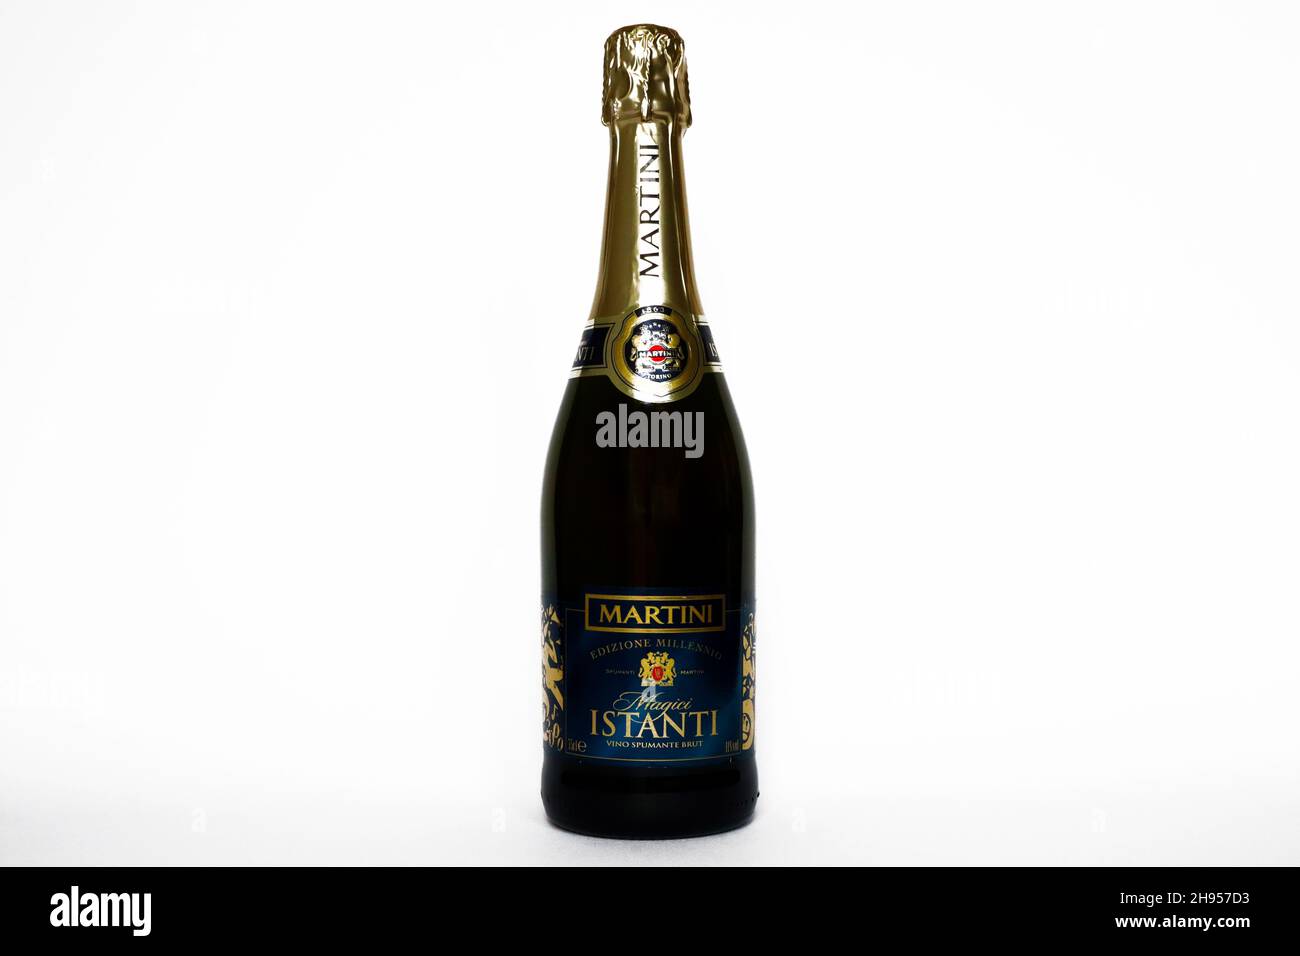 Magici Istanti MARTINI Italian Brut Sparkling Wine Spumante. Made in Italy by Martini-Rossi S.p.A. Stock Photo